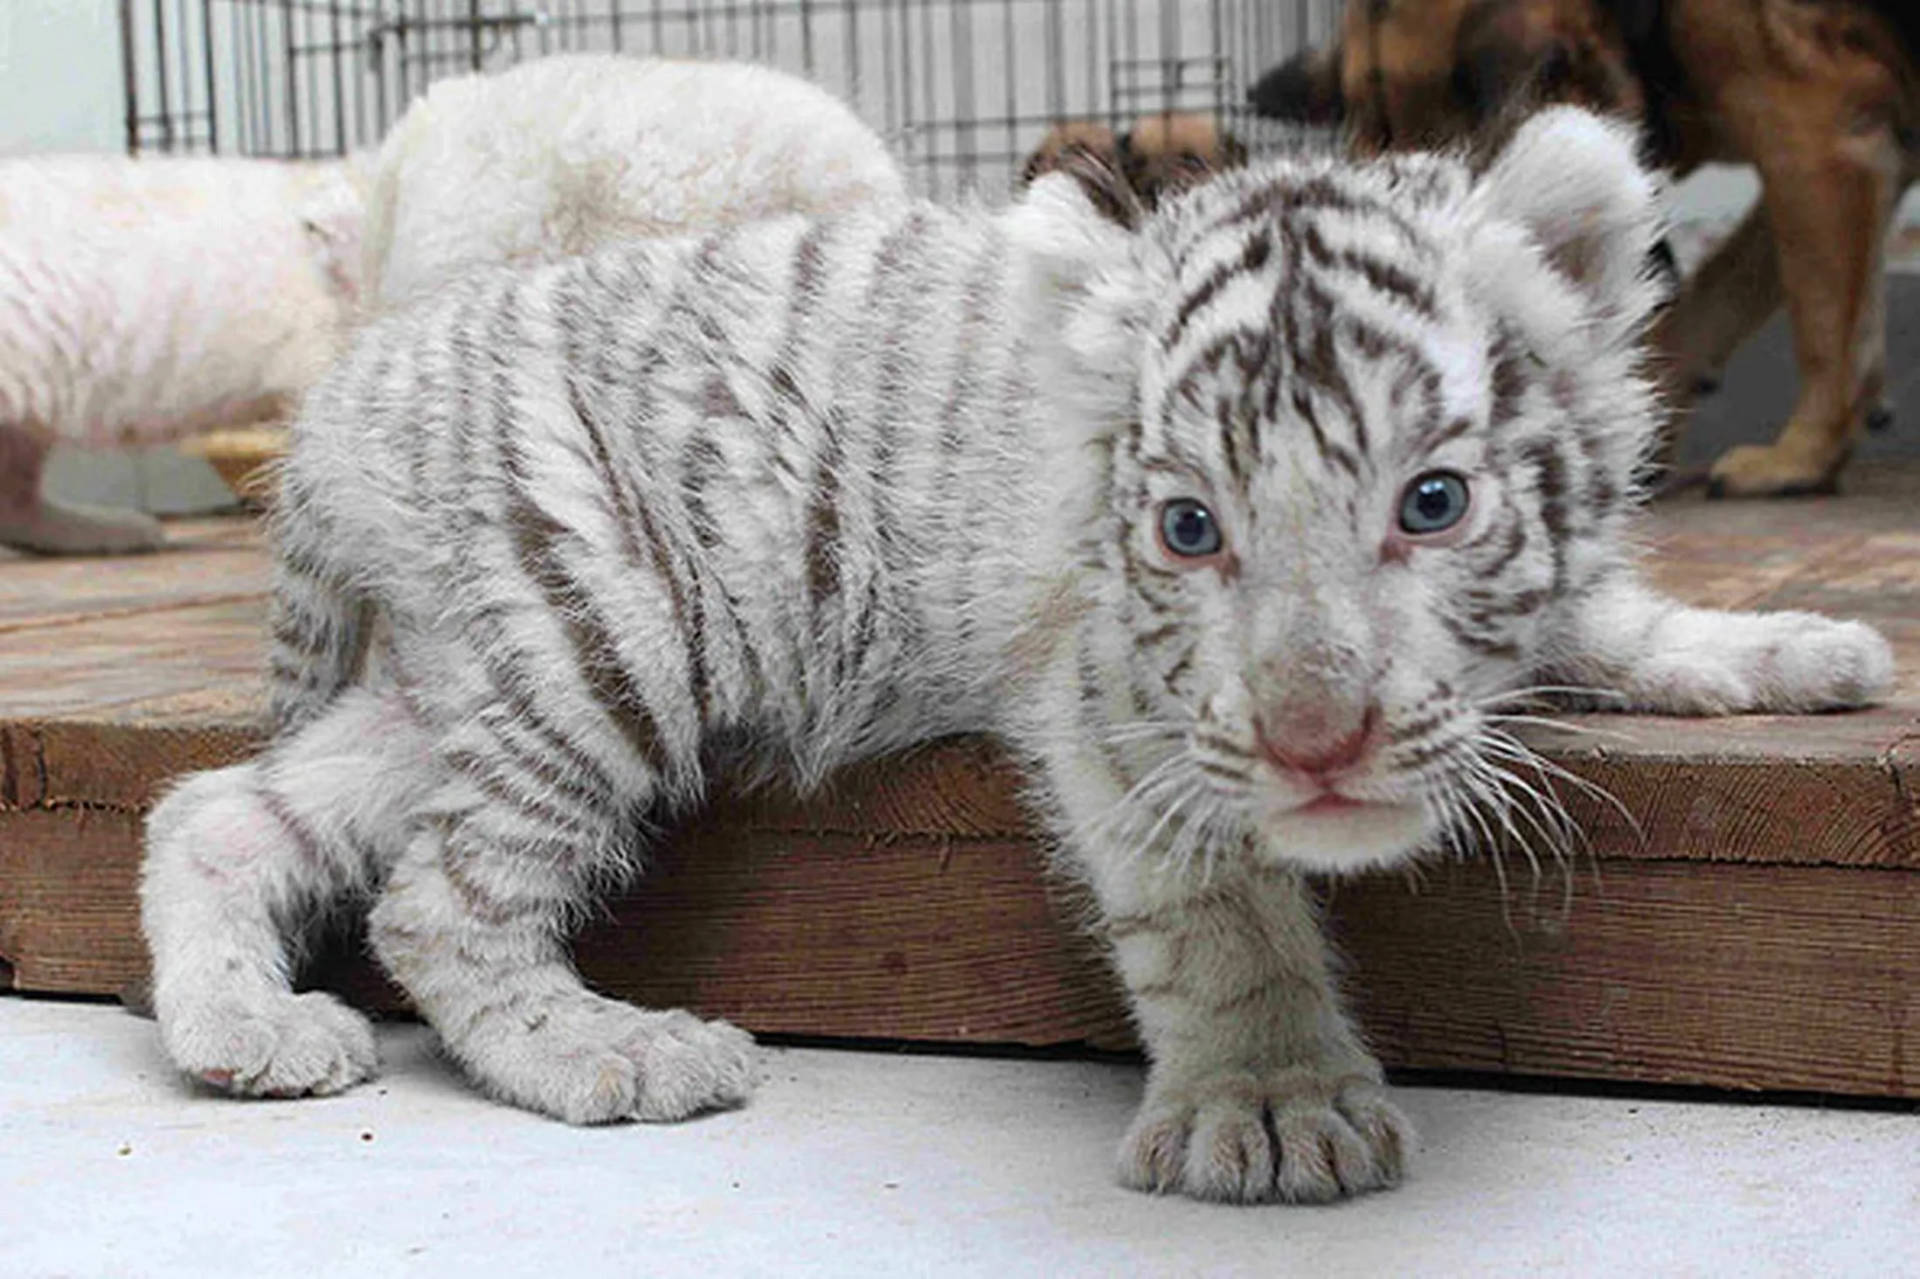 Baby White Tiger Gazing Intently